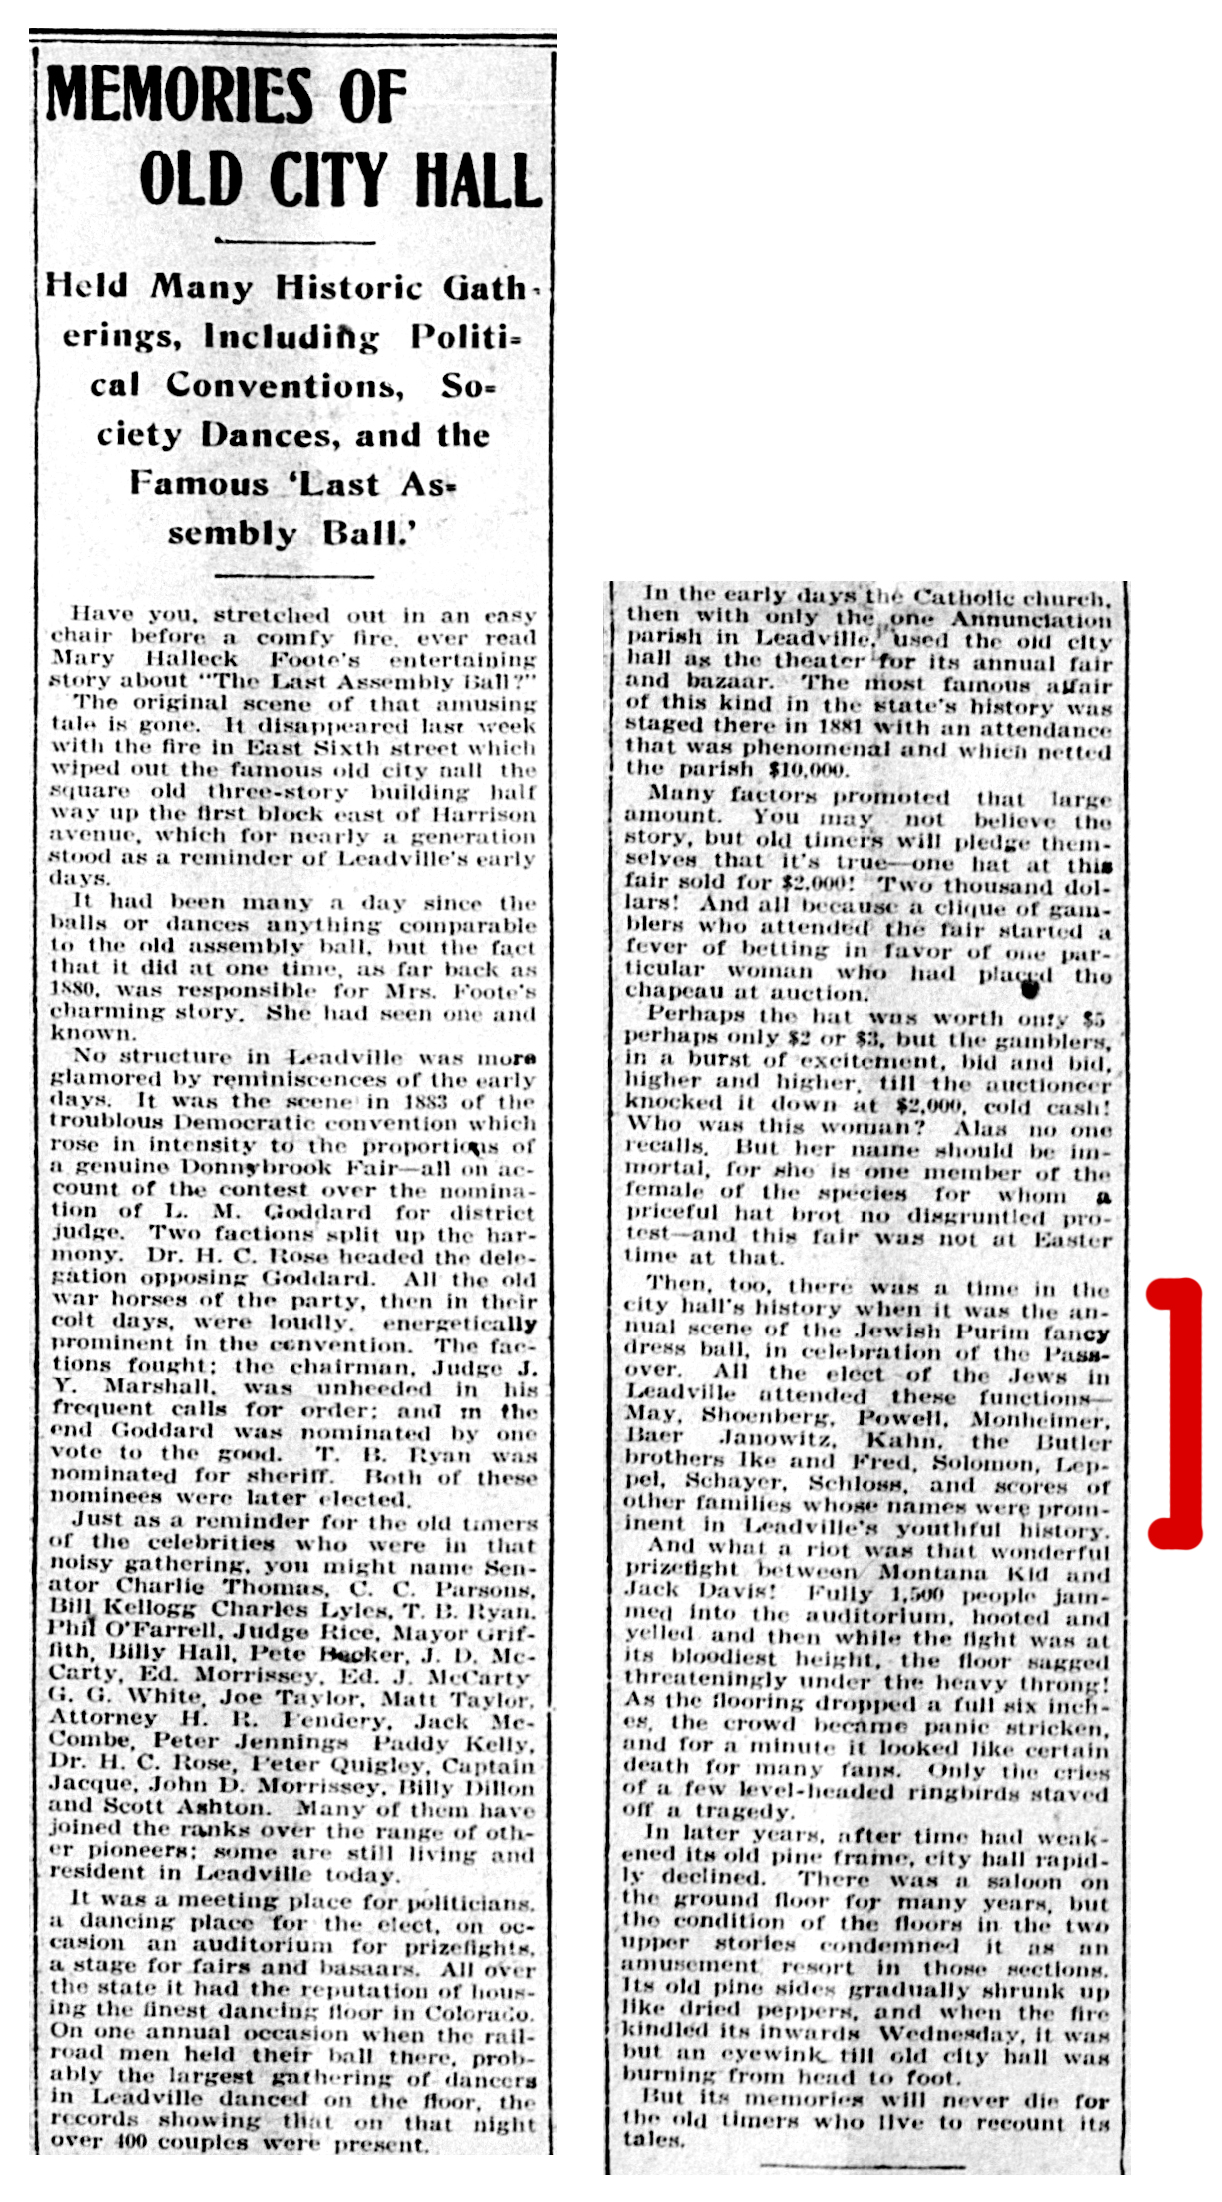 The Herald Democrat. Monday, April 3, 1916.